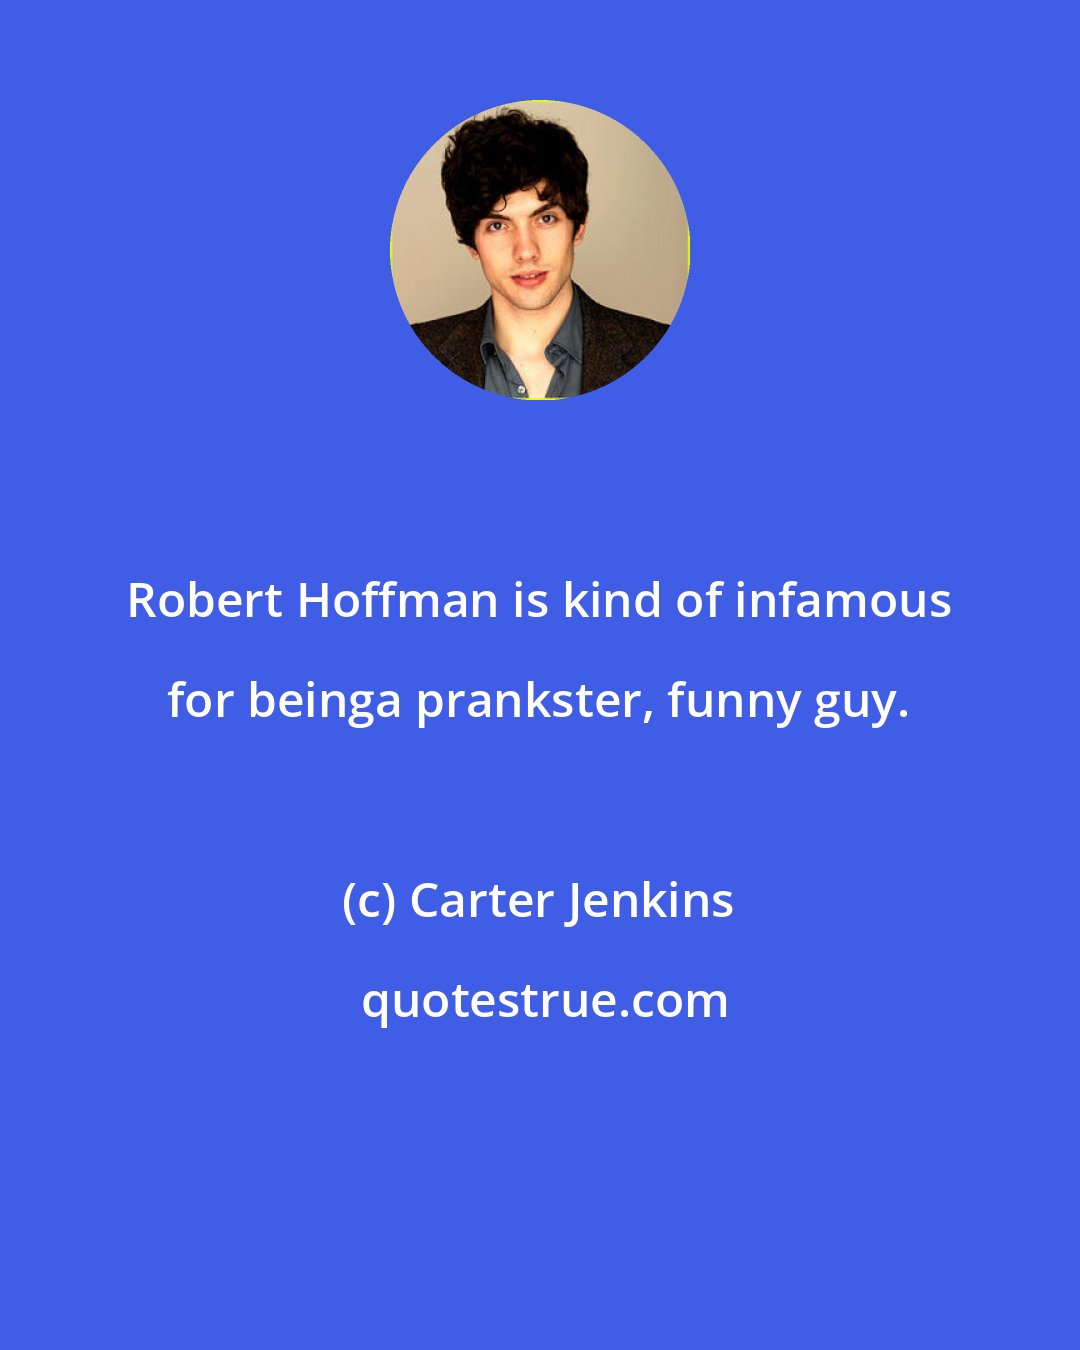 Carter Jenkins: Robert Hoffman is kind of infamous for beinga prankster, funny guy.